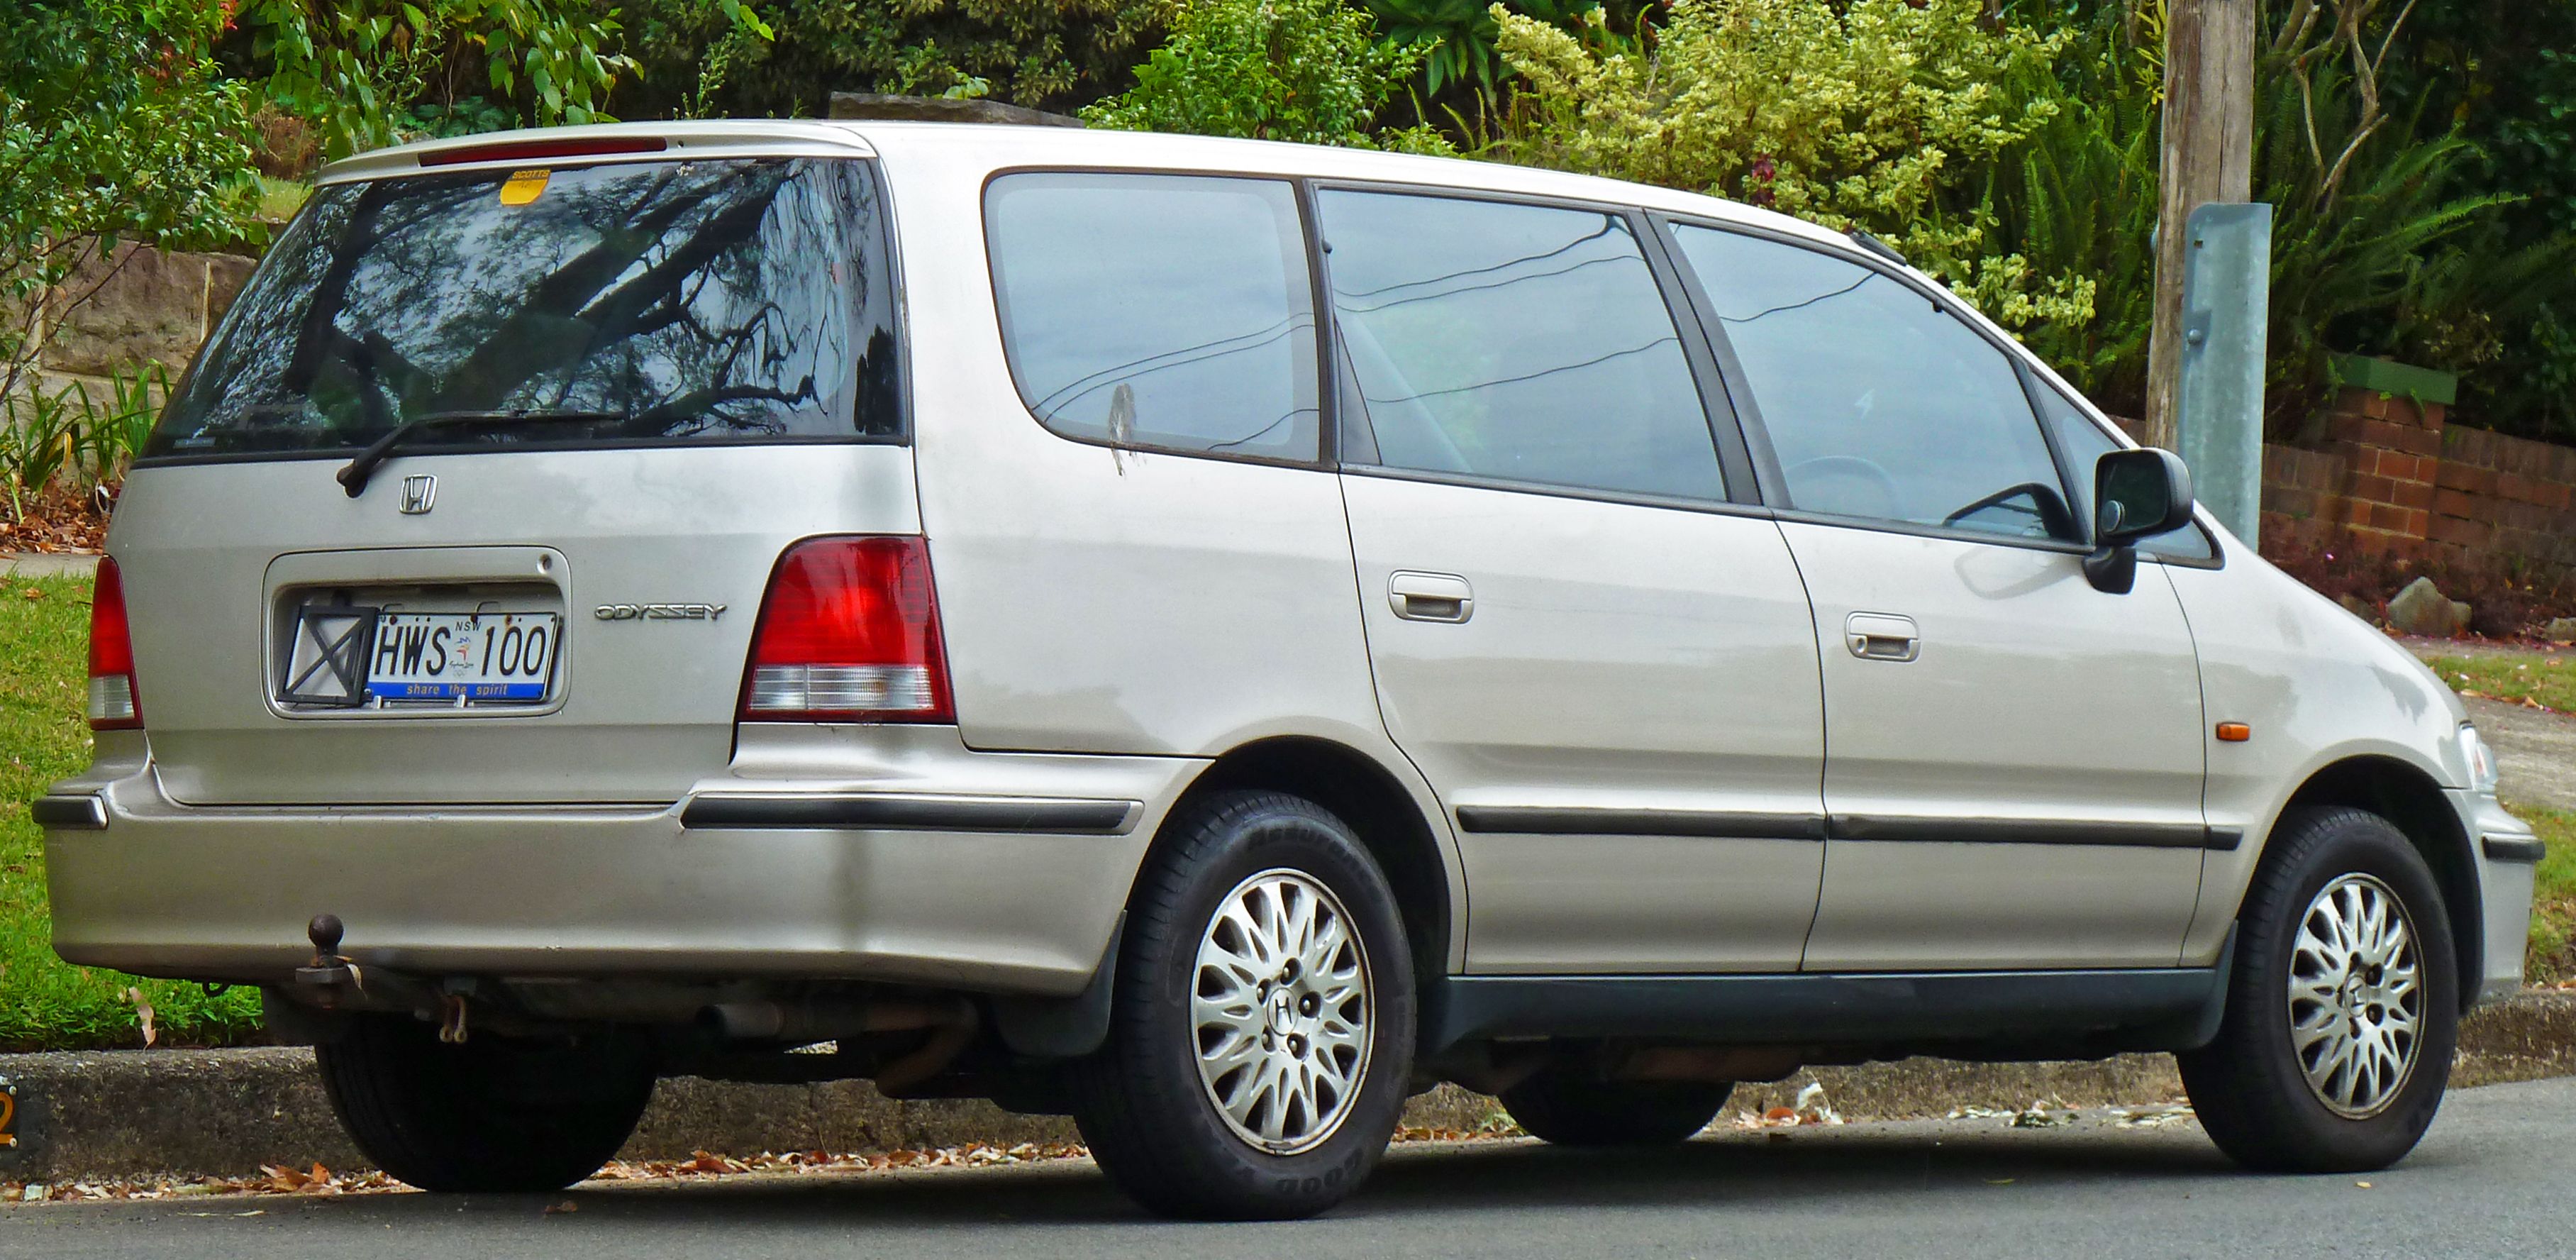 2000 Honda Odyssey minvan from the back